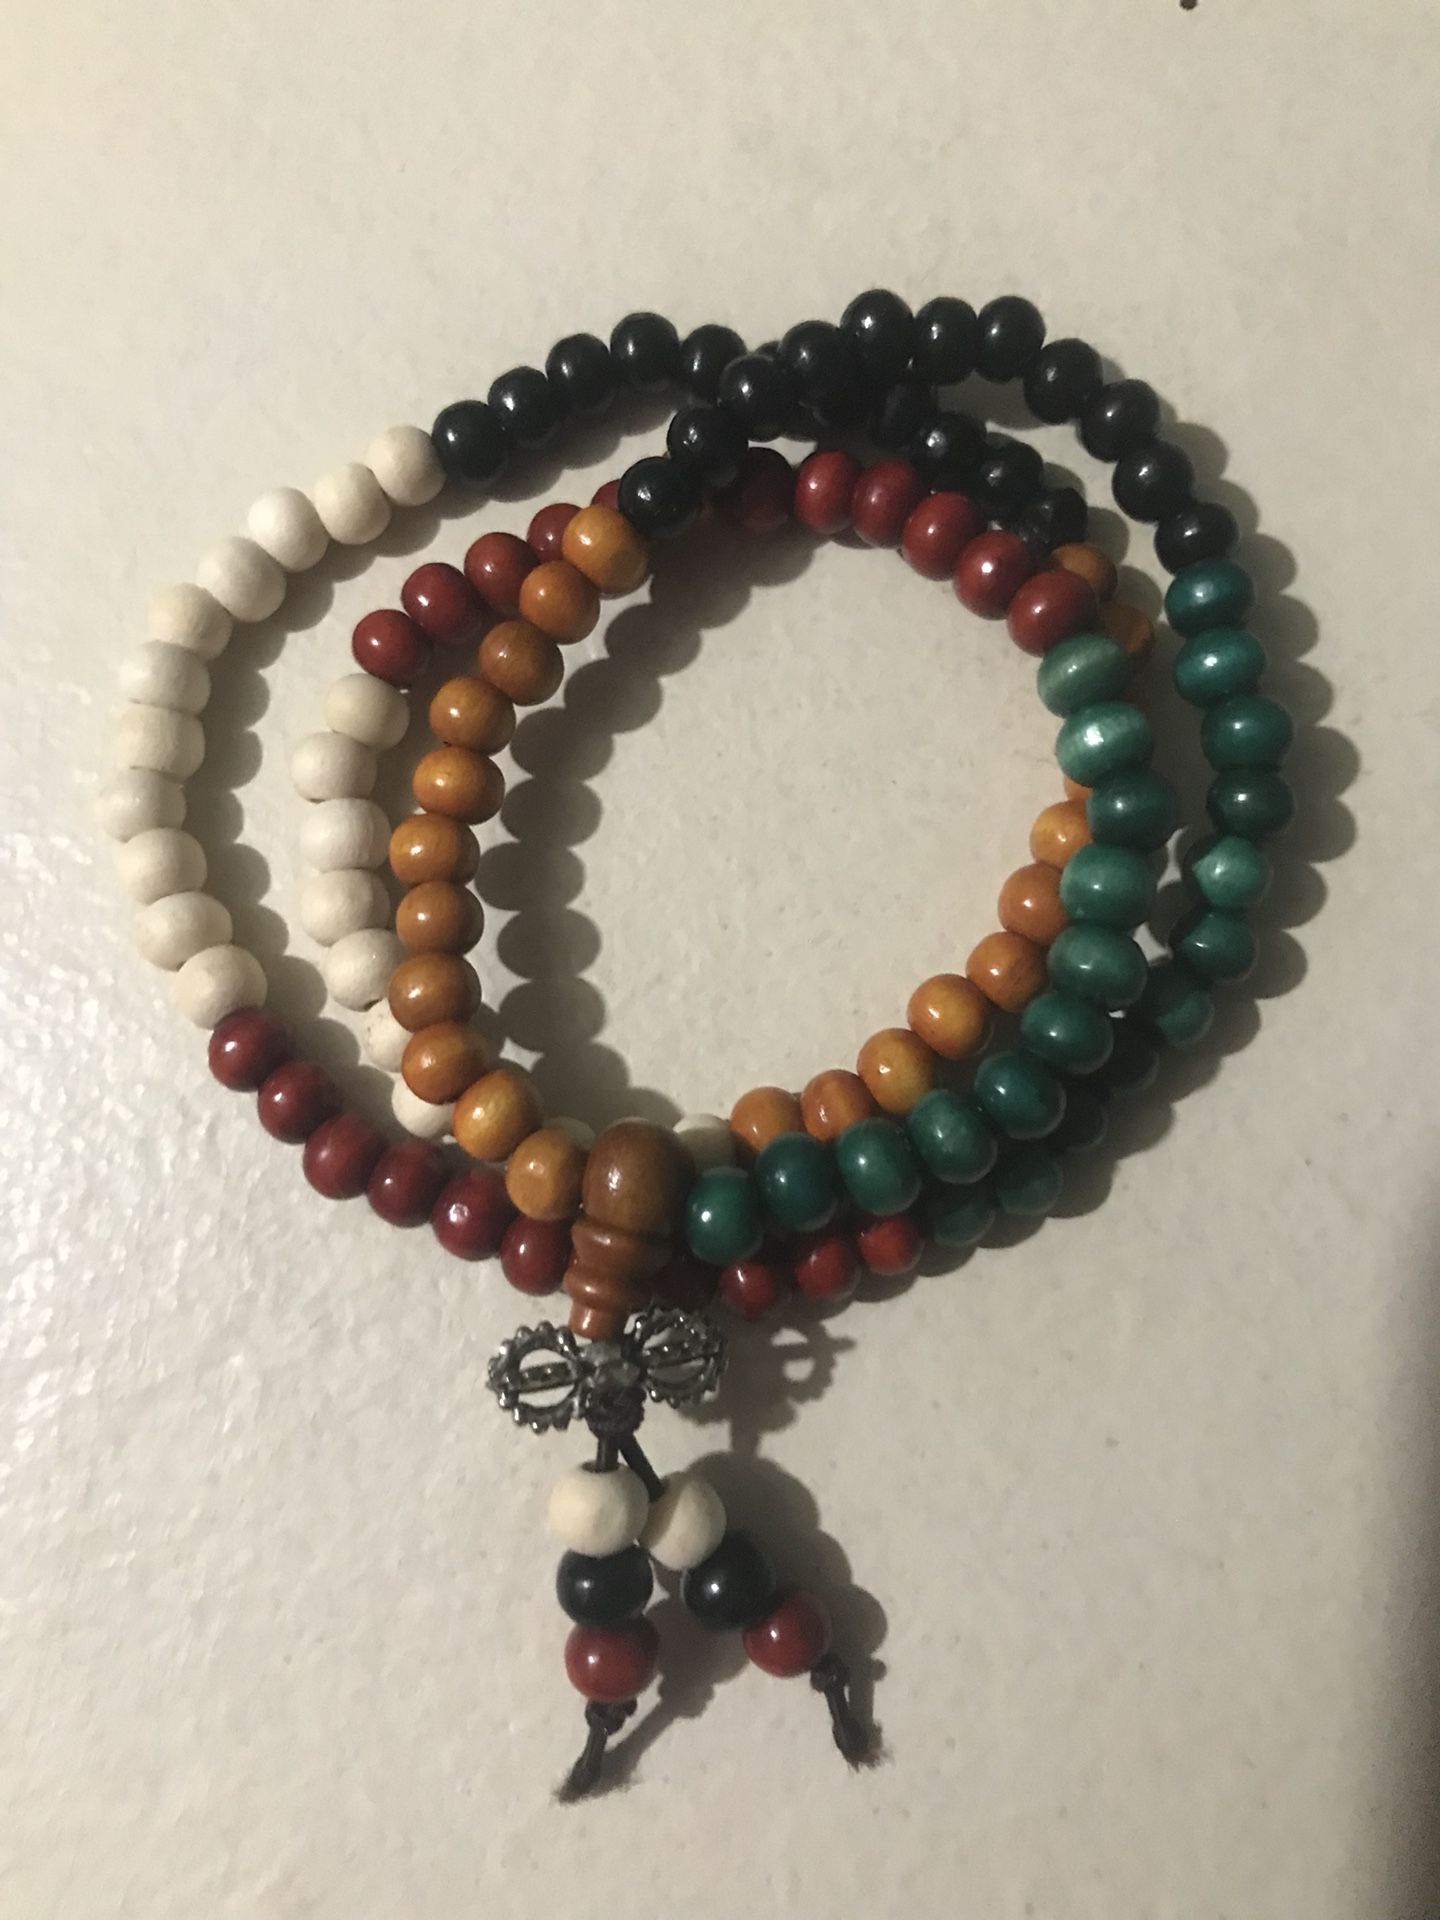 Multicolored mala beads/meditation prayer beads